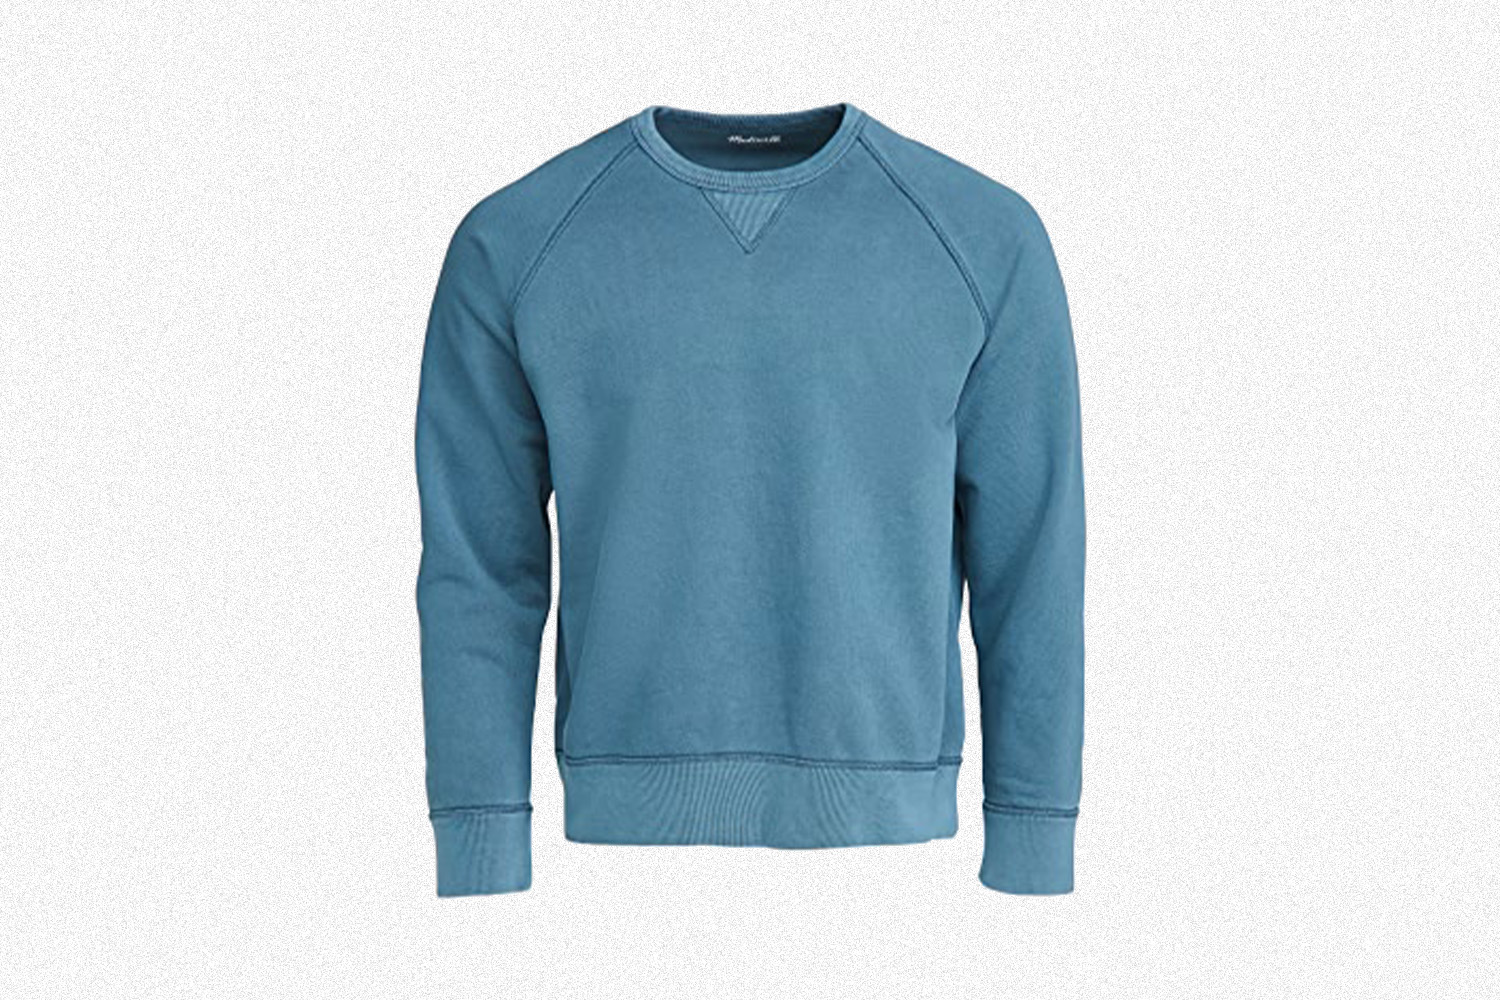 Madewell Men's Garment-Dyed Sweatshirt in blue